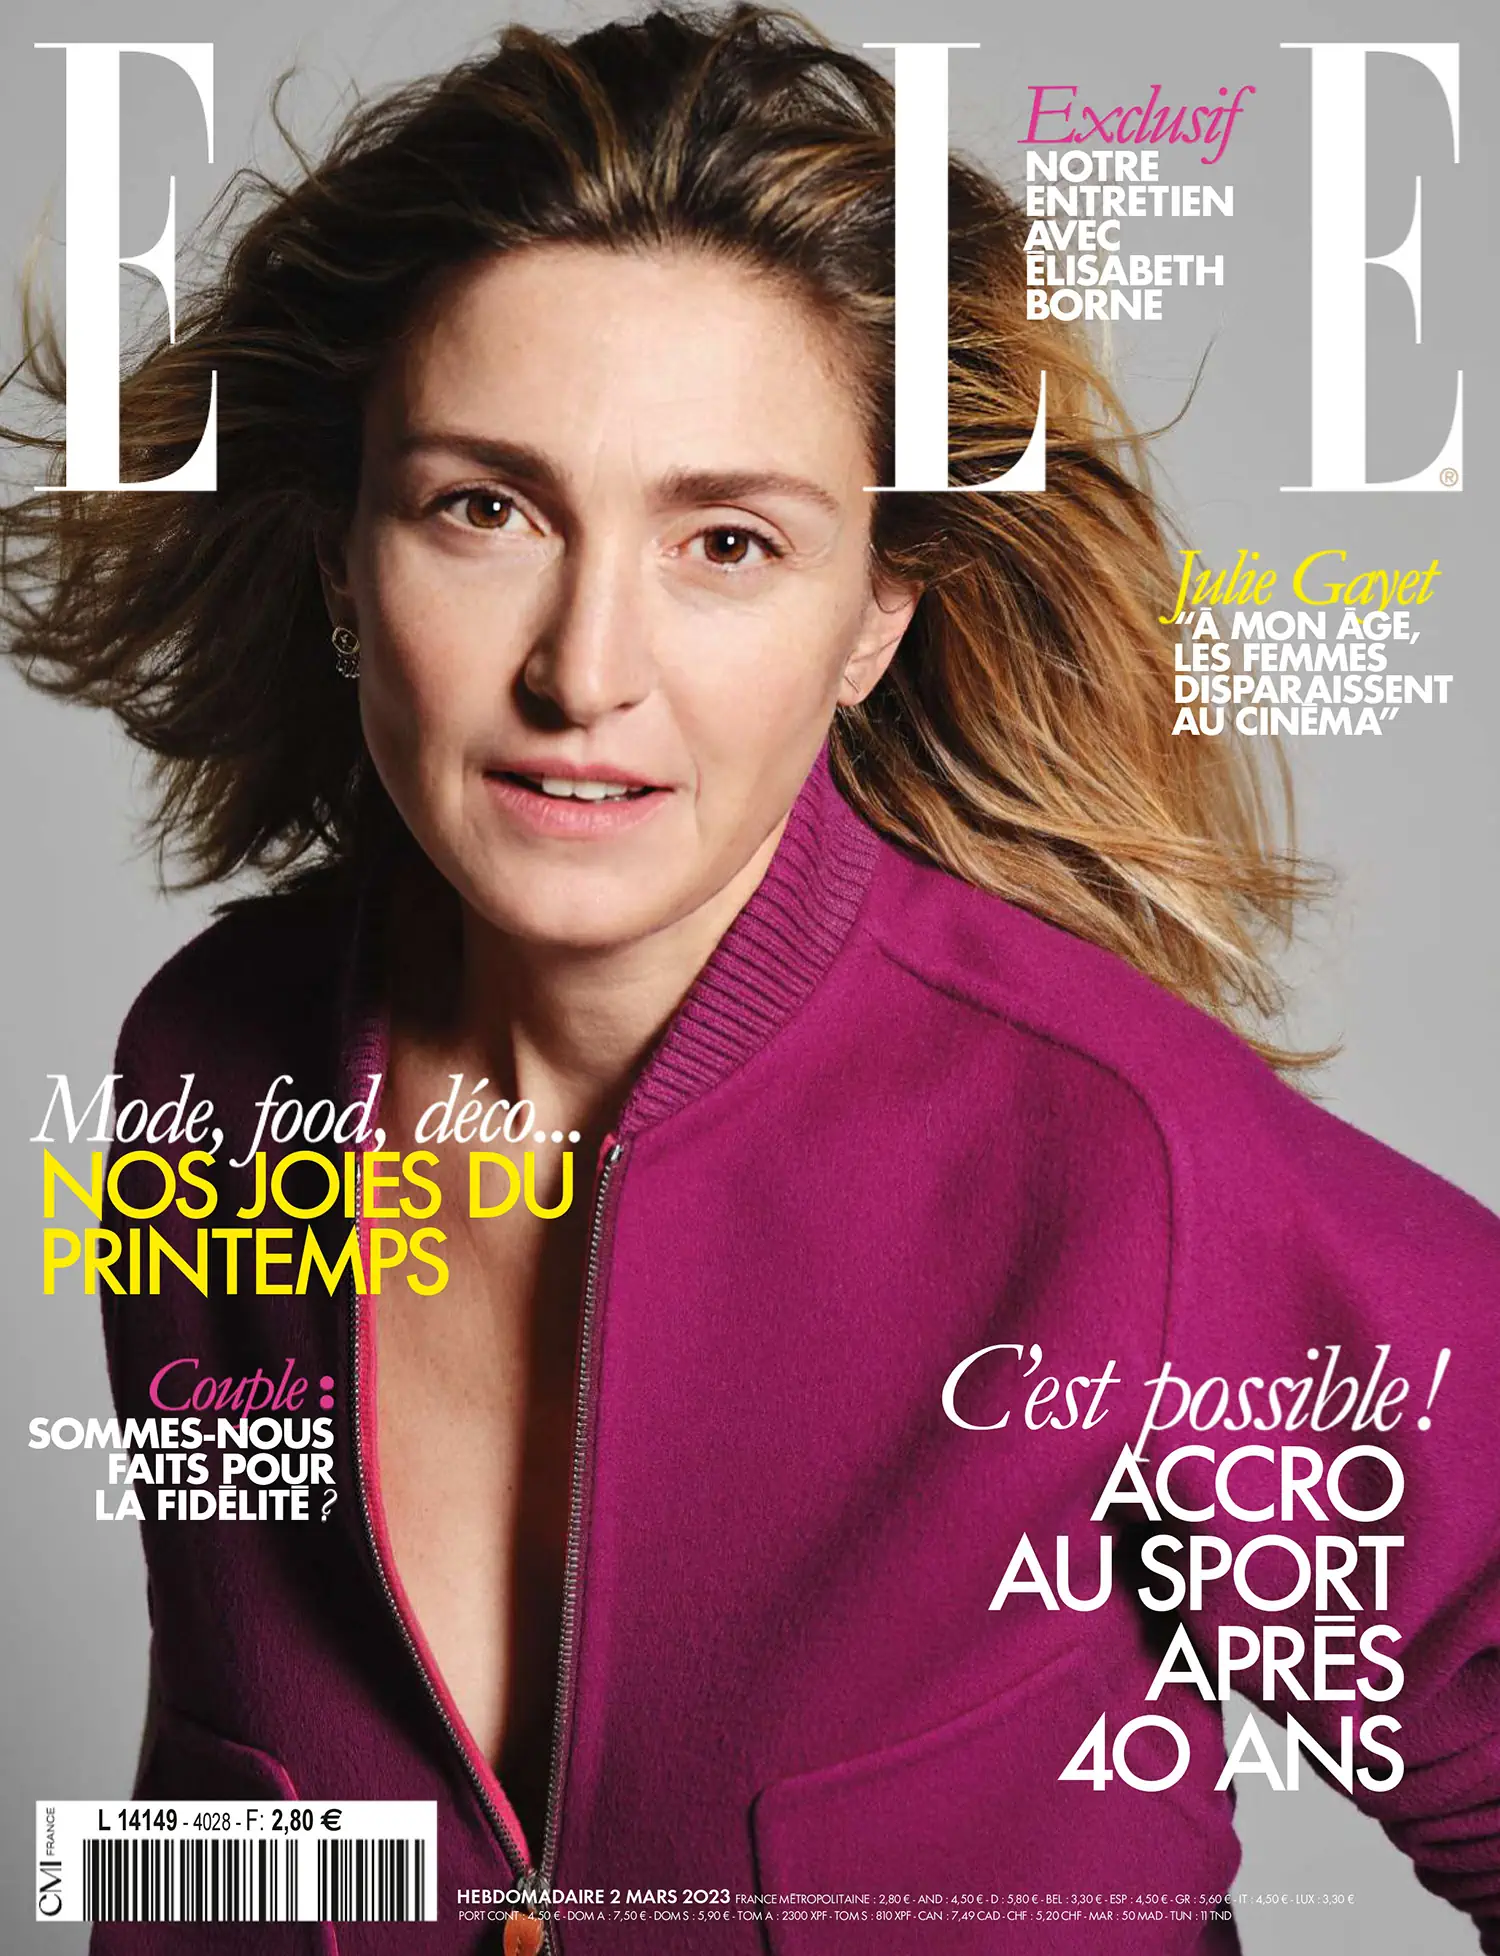 Julie Gayet covers Elle France March 2nd, 2023 by Dant Studio